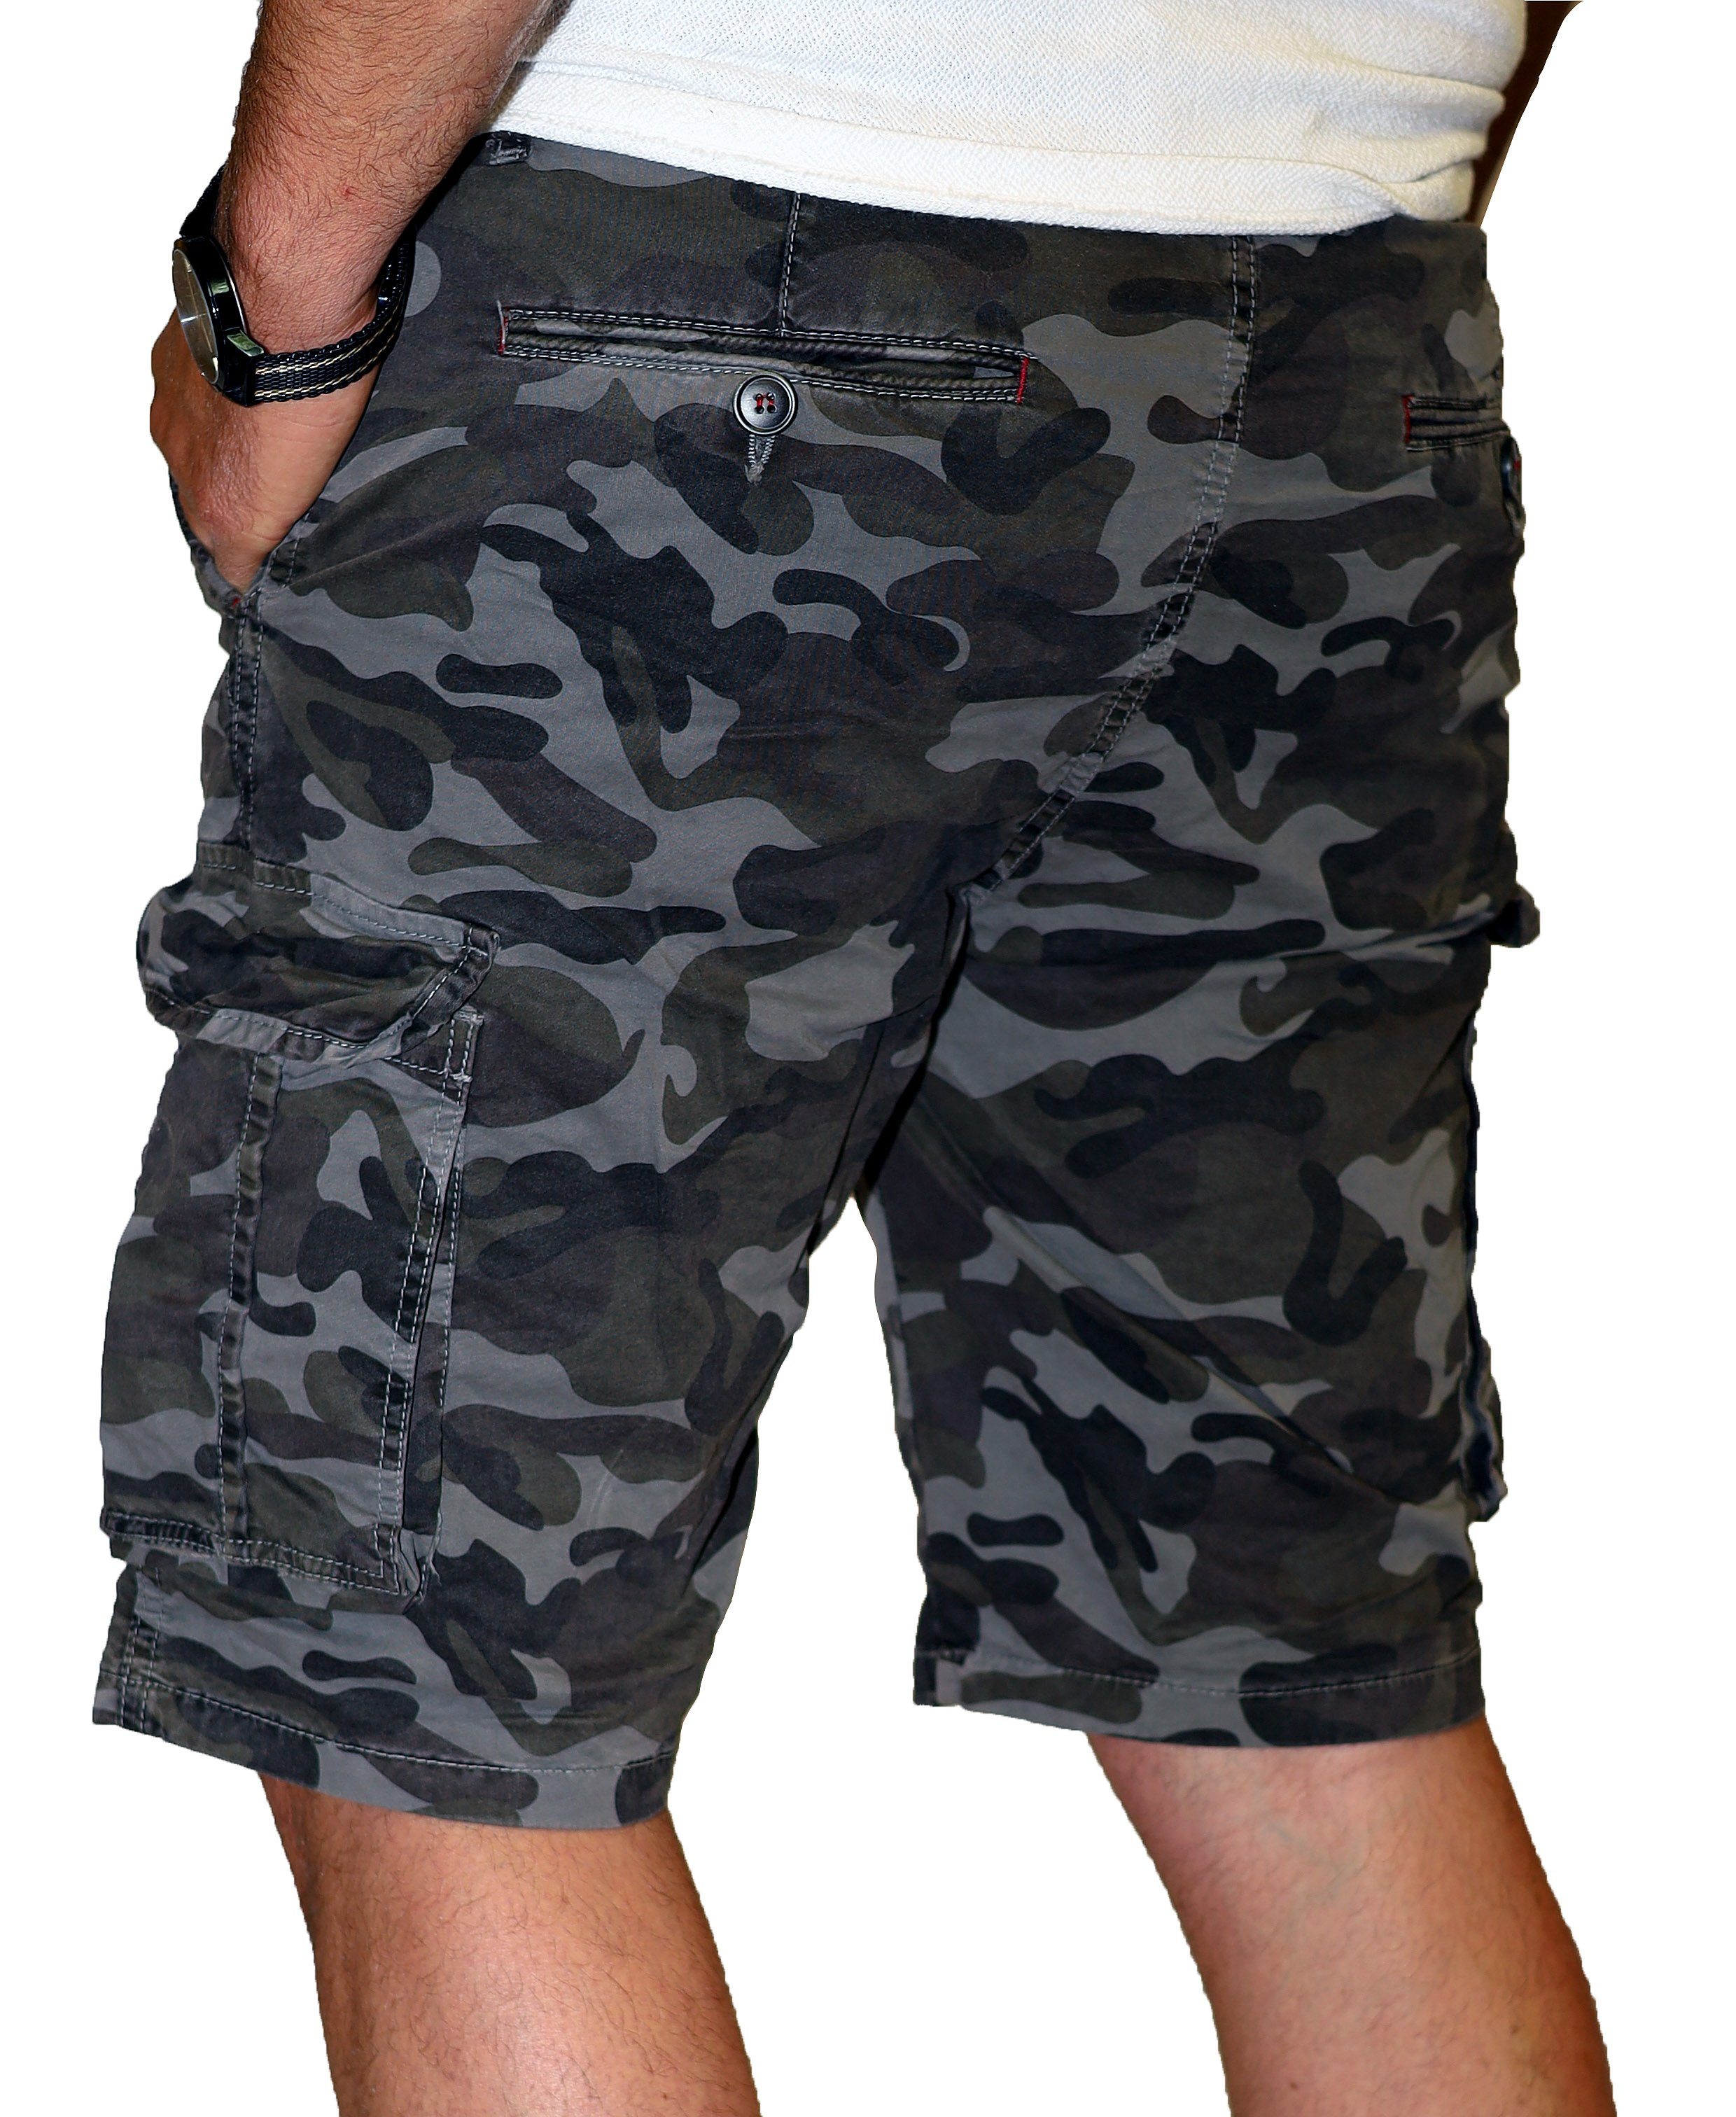 RMK Cargoshorts Herren Bermuda Baumwolle kurze Short aus Tarn Set Camouflage 100% Grau Hose Army Tarnfarben, in